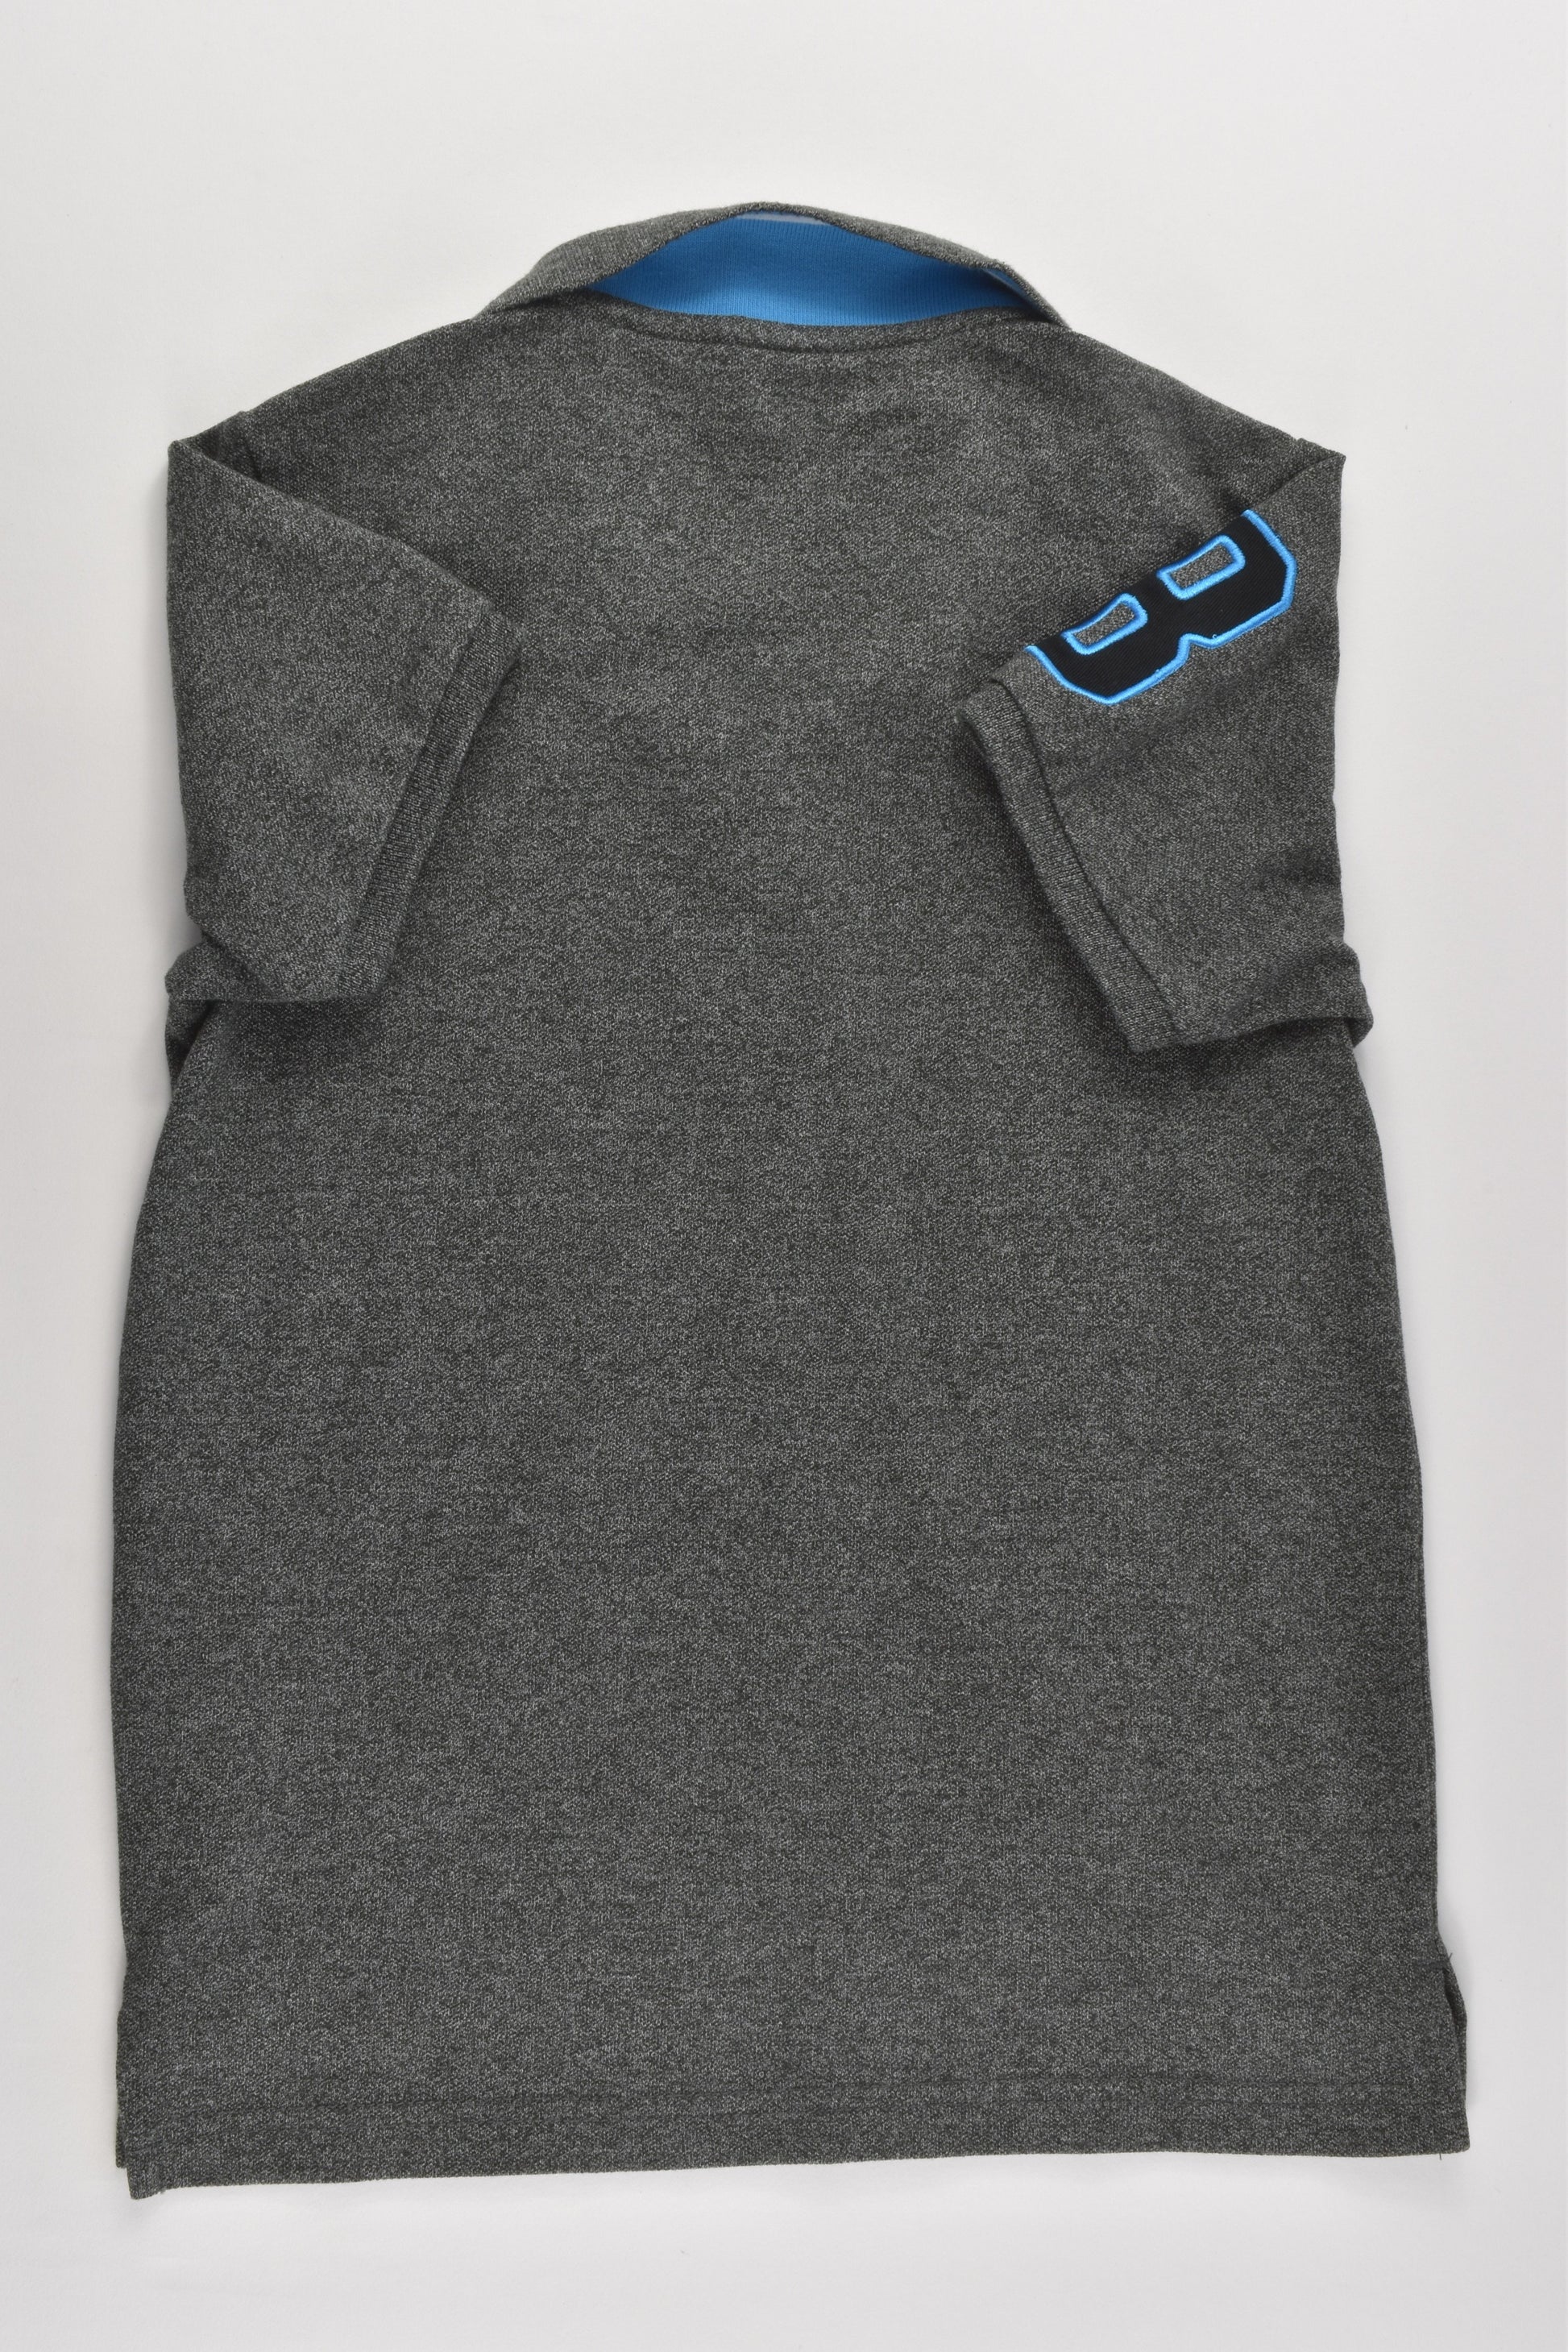 Giordano Junior Size 6-7 (120 cm) Polo Shirt